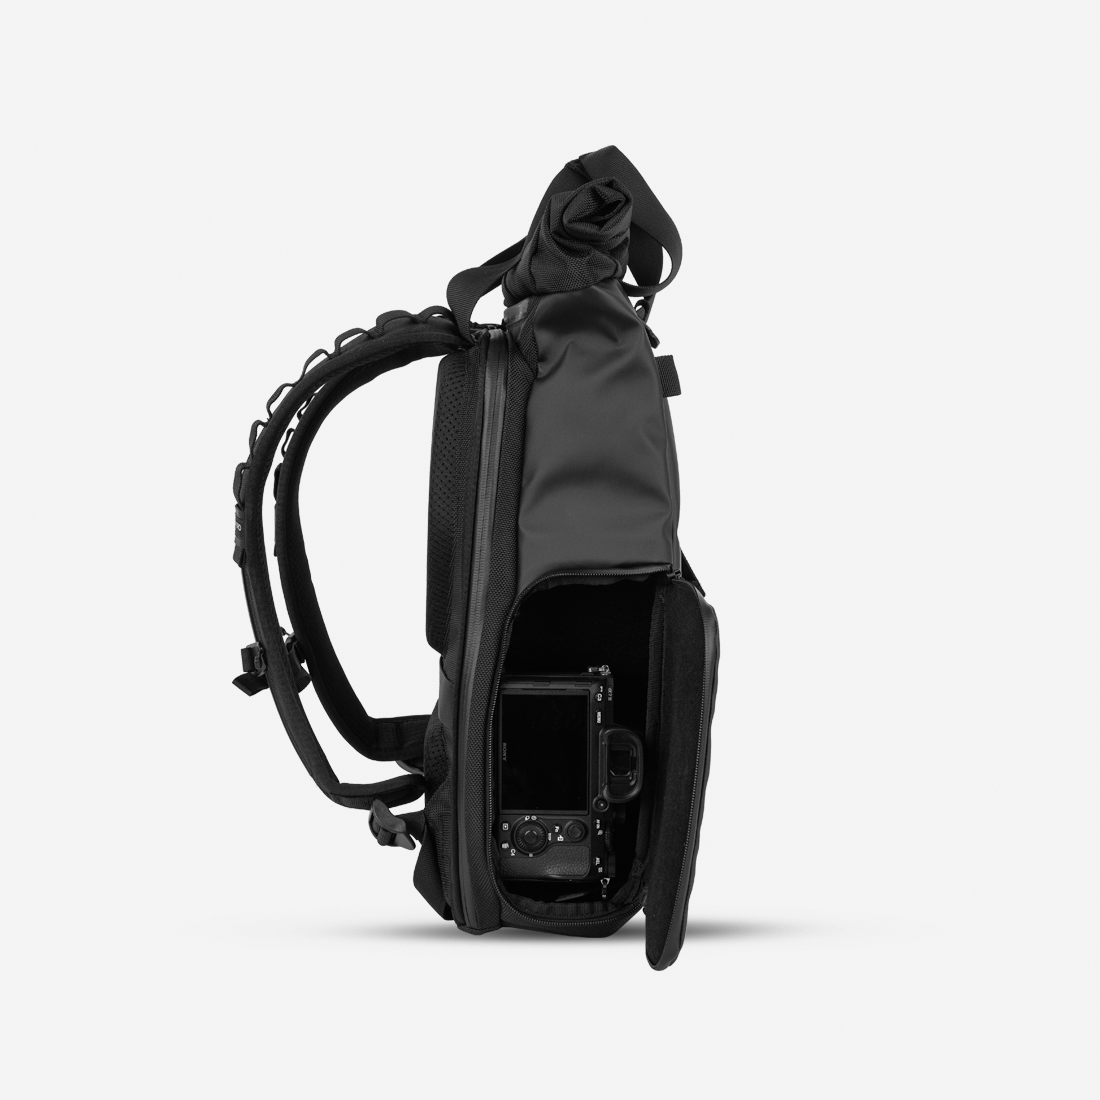 WANDRD PRVKE LITE - 11-16L Expandable Compact Camera Bag - Storming Gravity